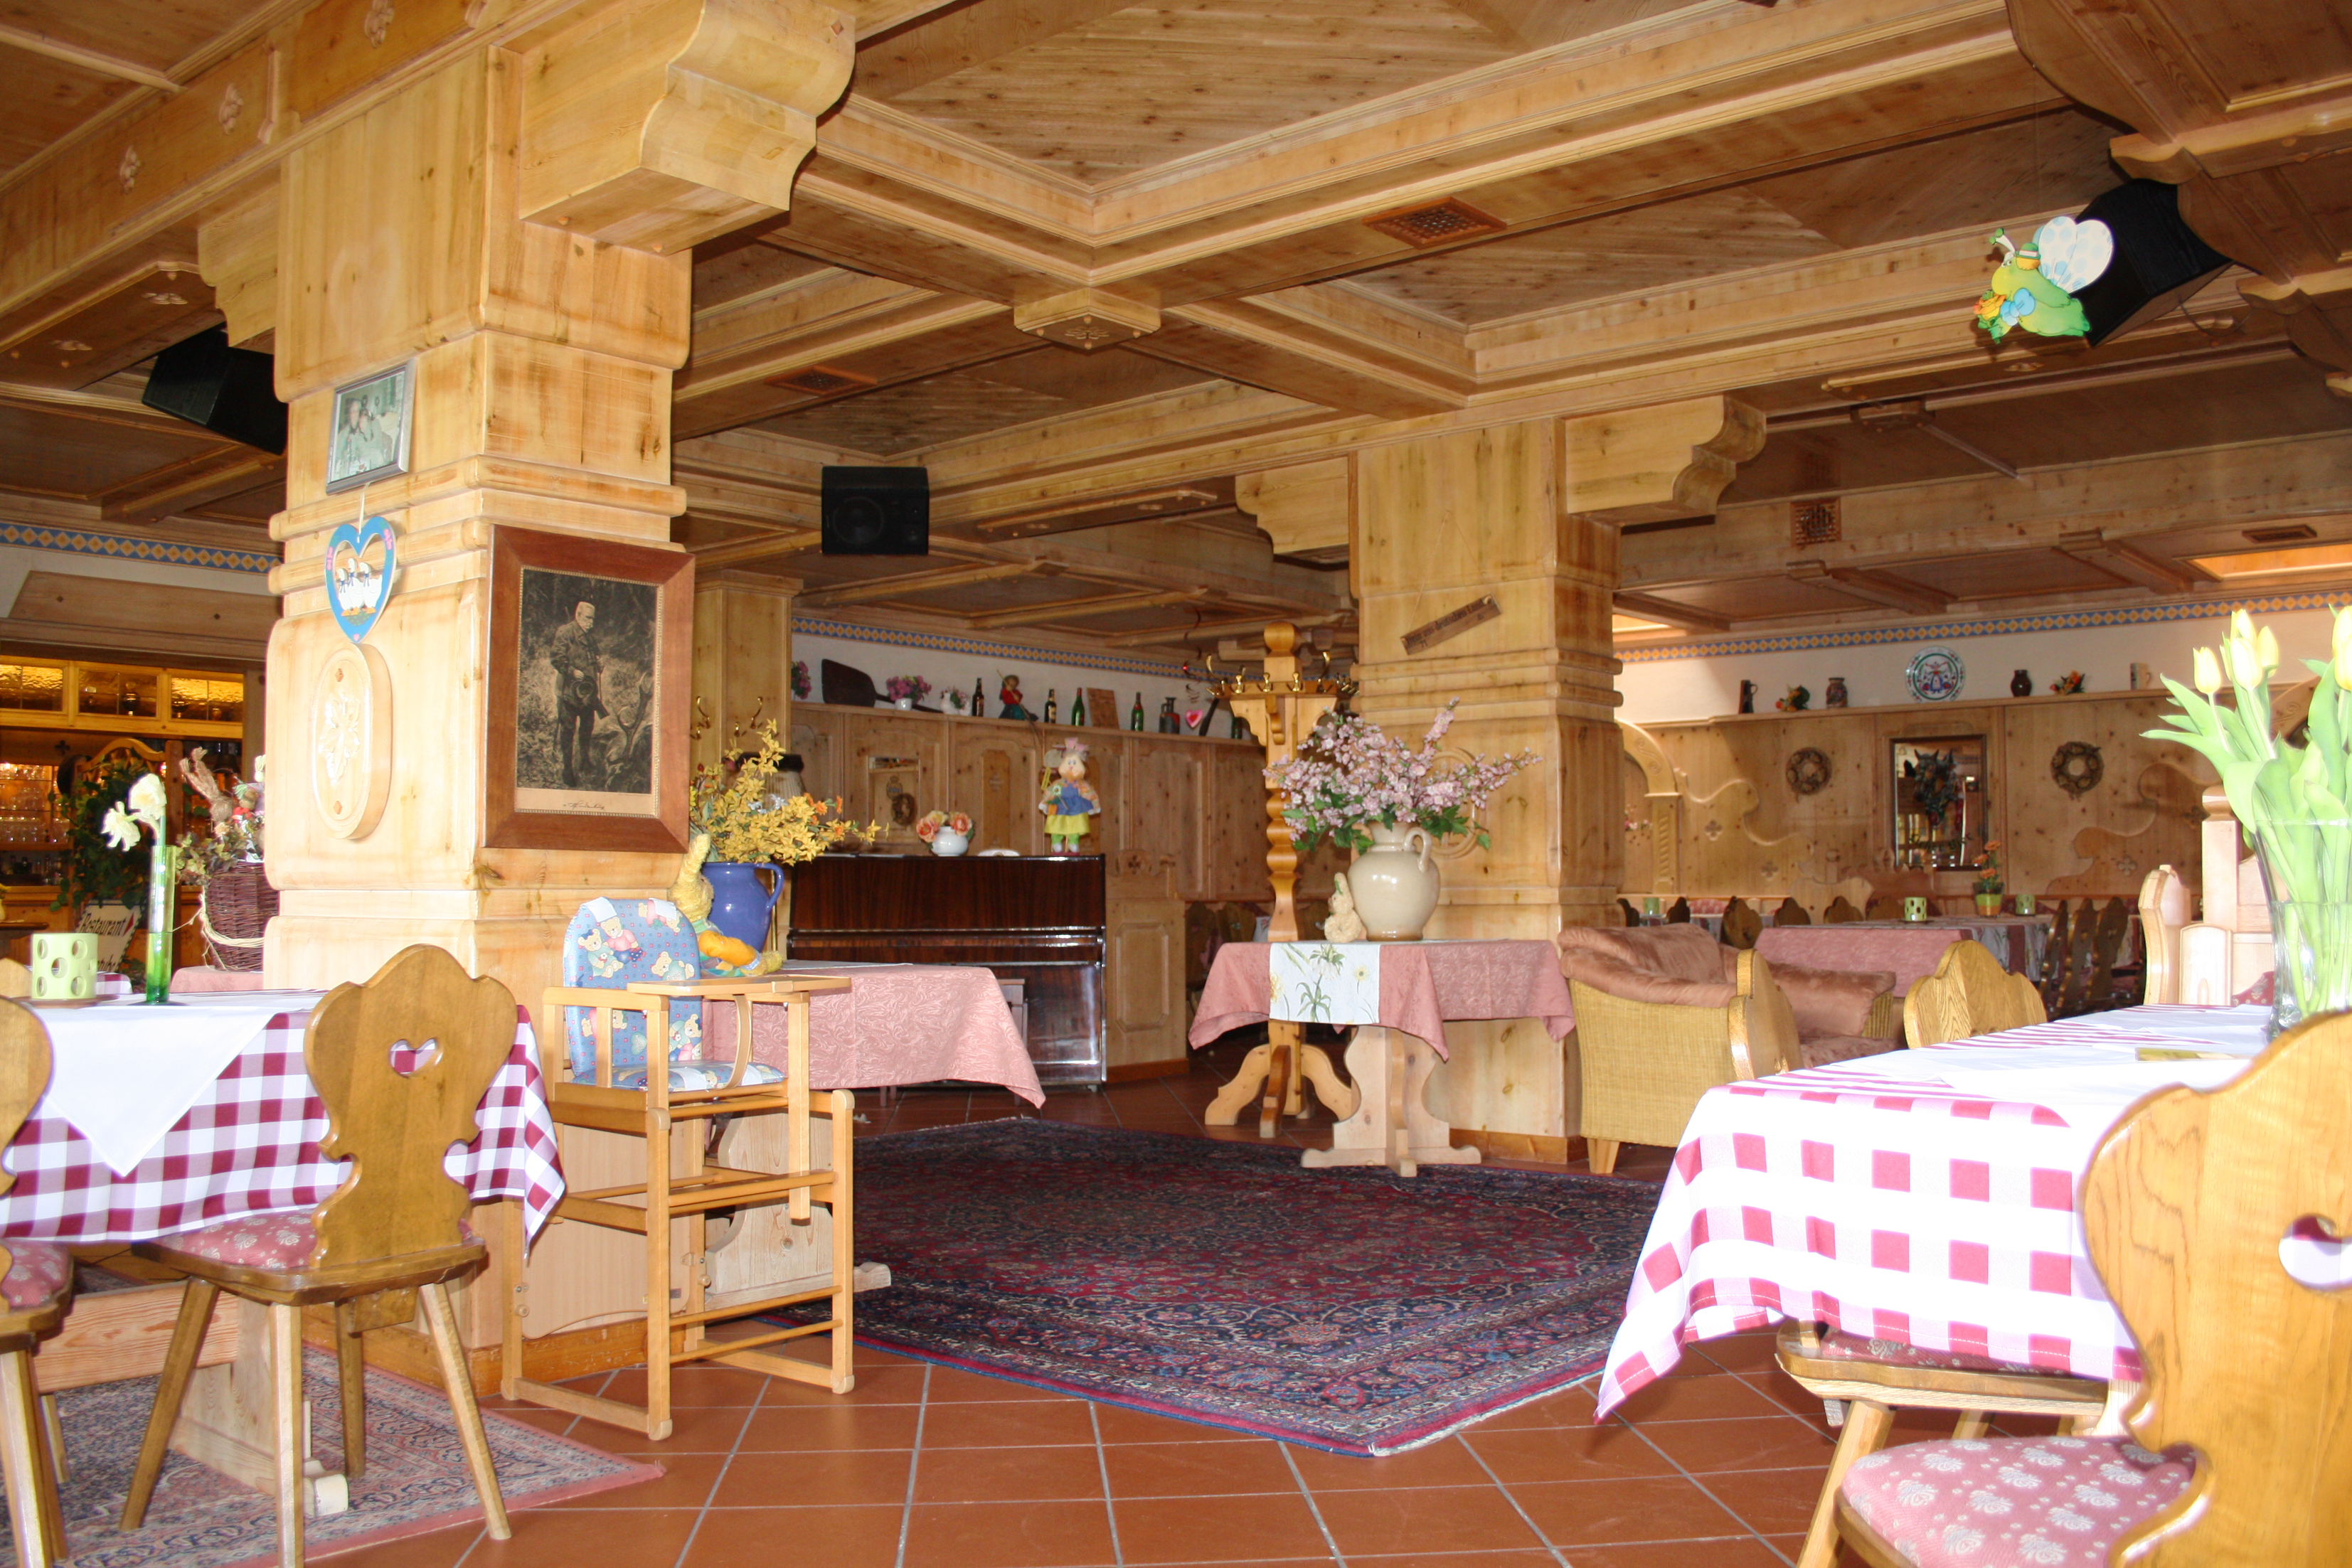 Restaurant im Landgasthof Rotlipp, Ortenberg.
